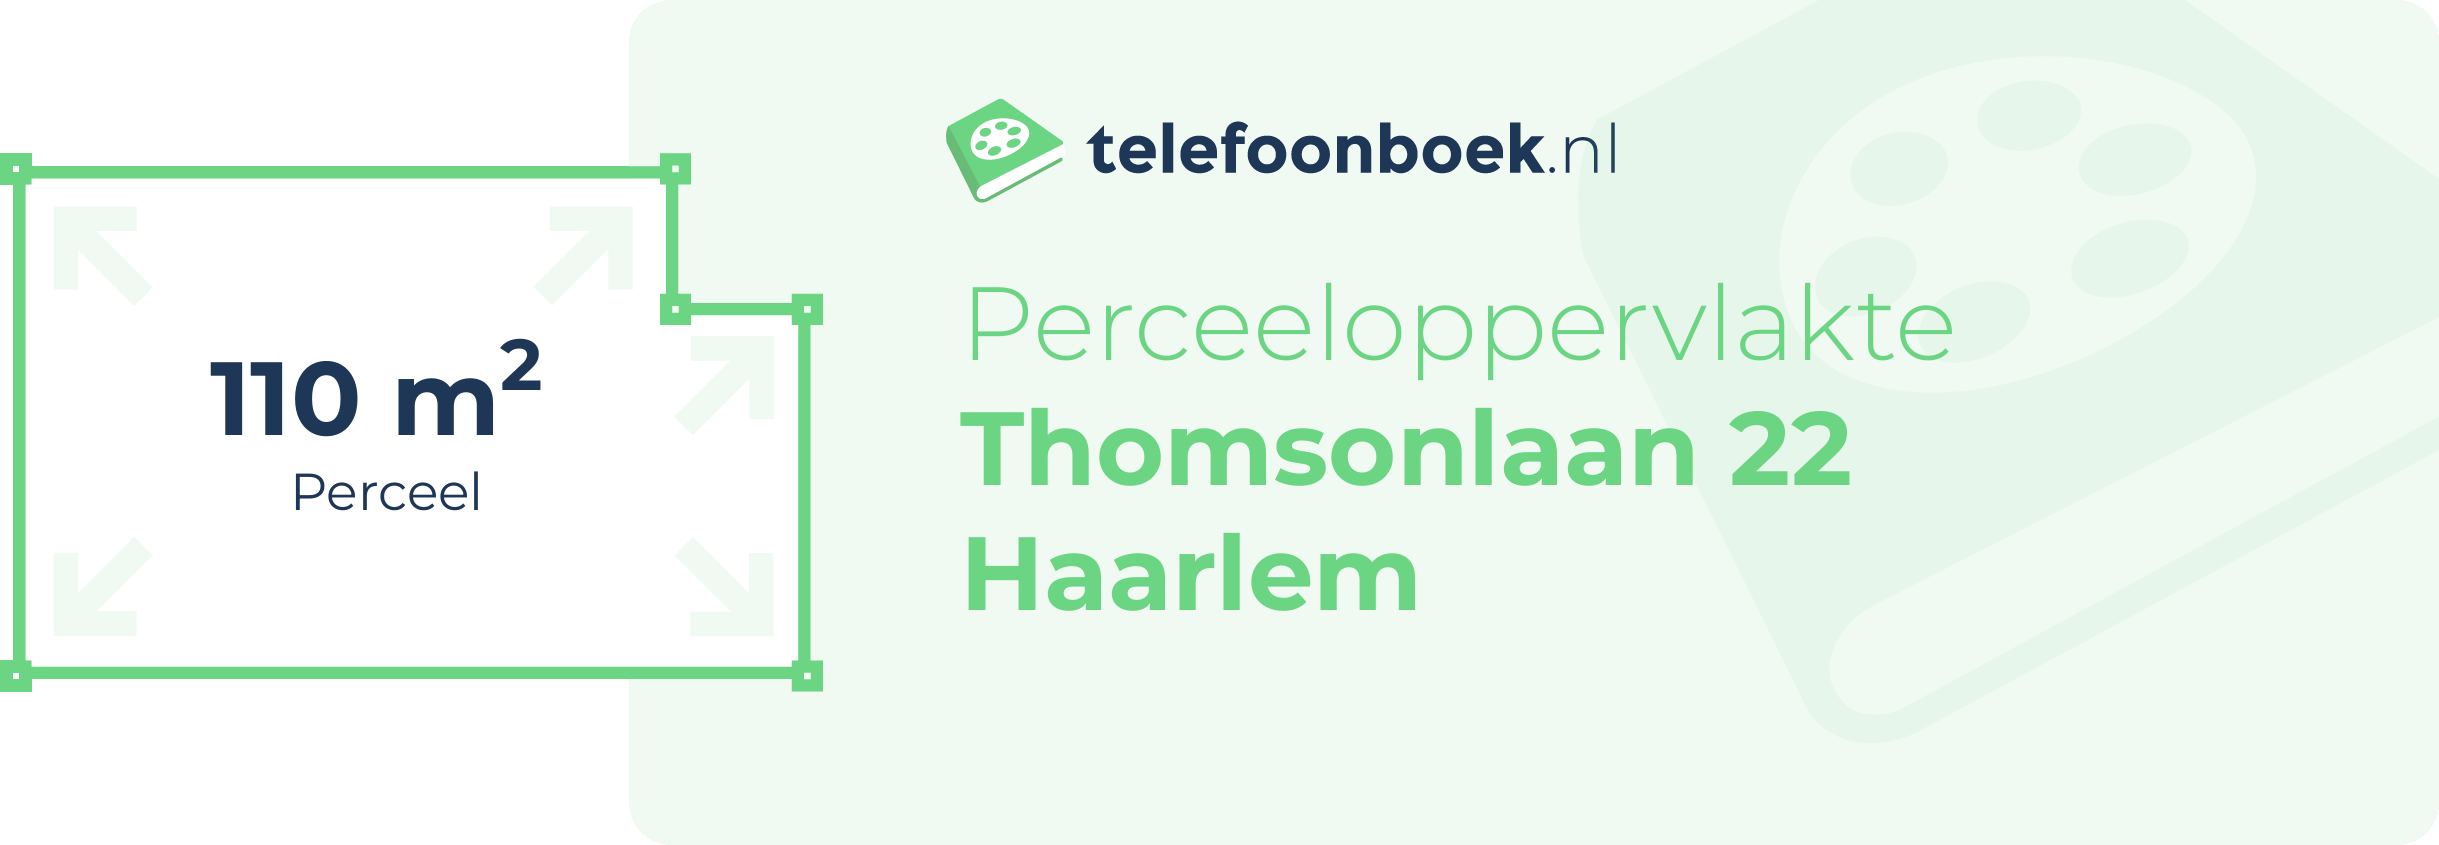 Perceeloppervlakte Thomsonlaan 22 Haarlem